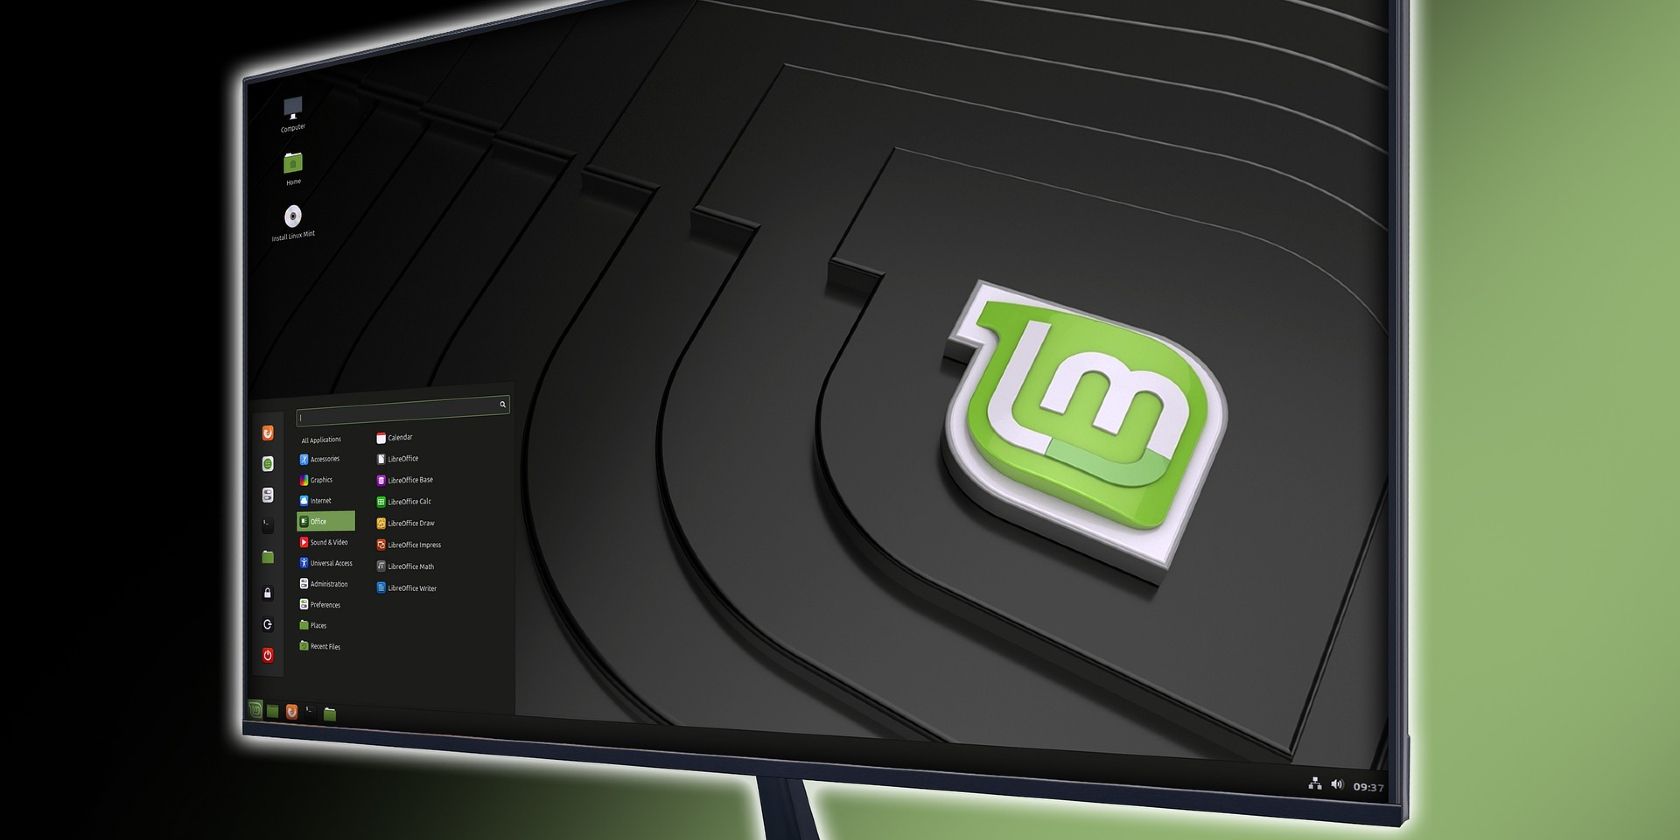 Linux mint desktop with logo and an open menu